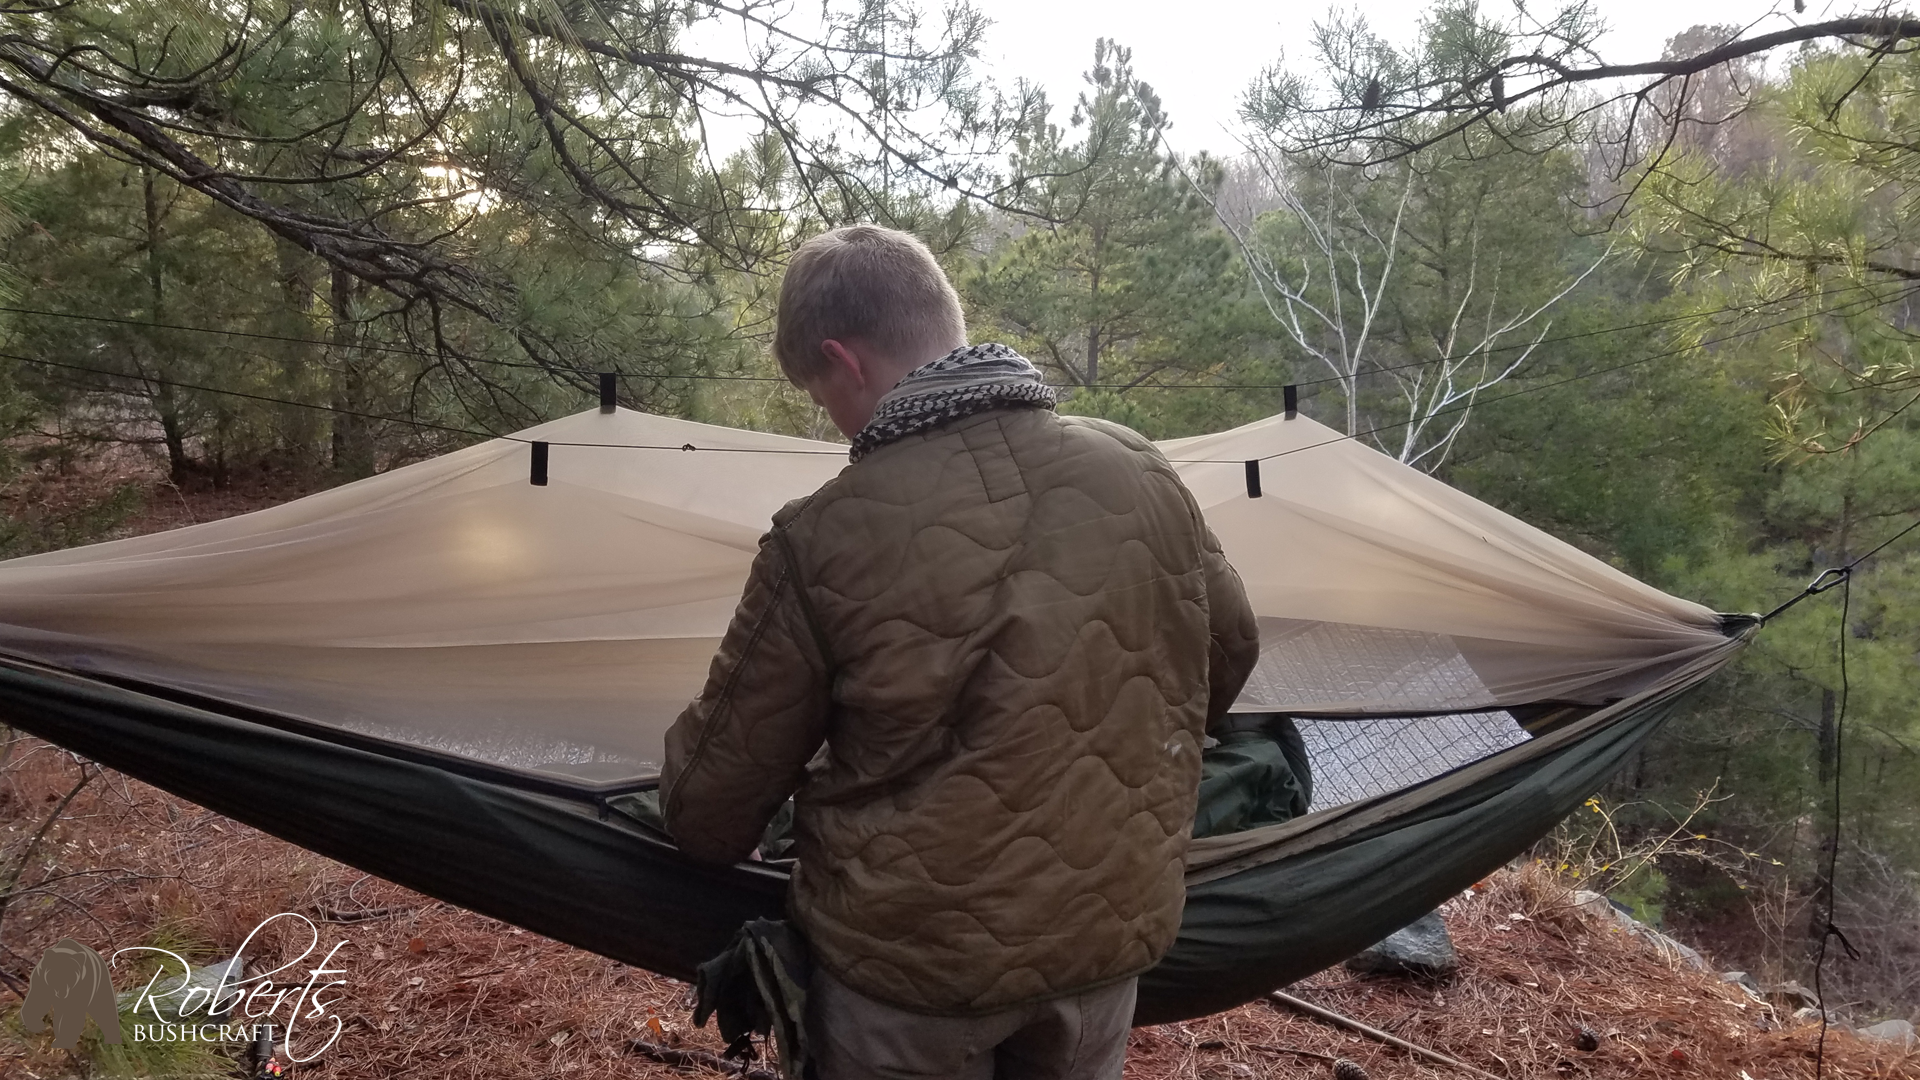 Bushcraft camp overnighter on the Roanoke River